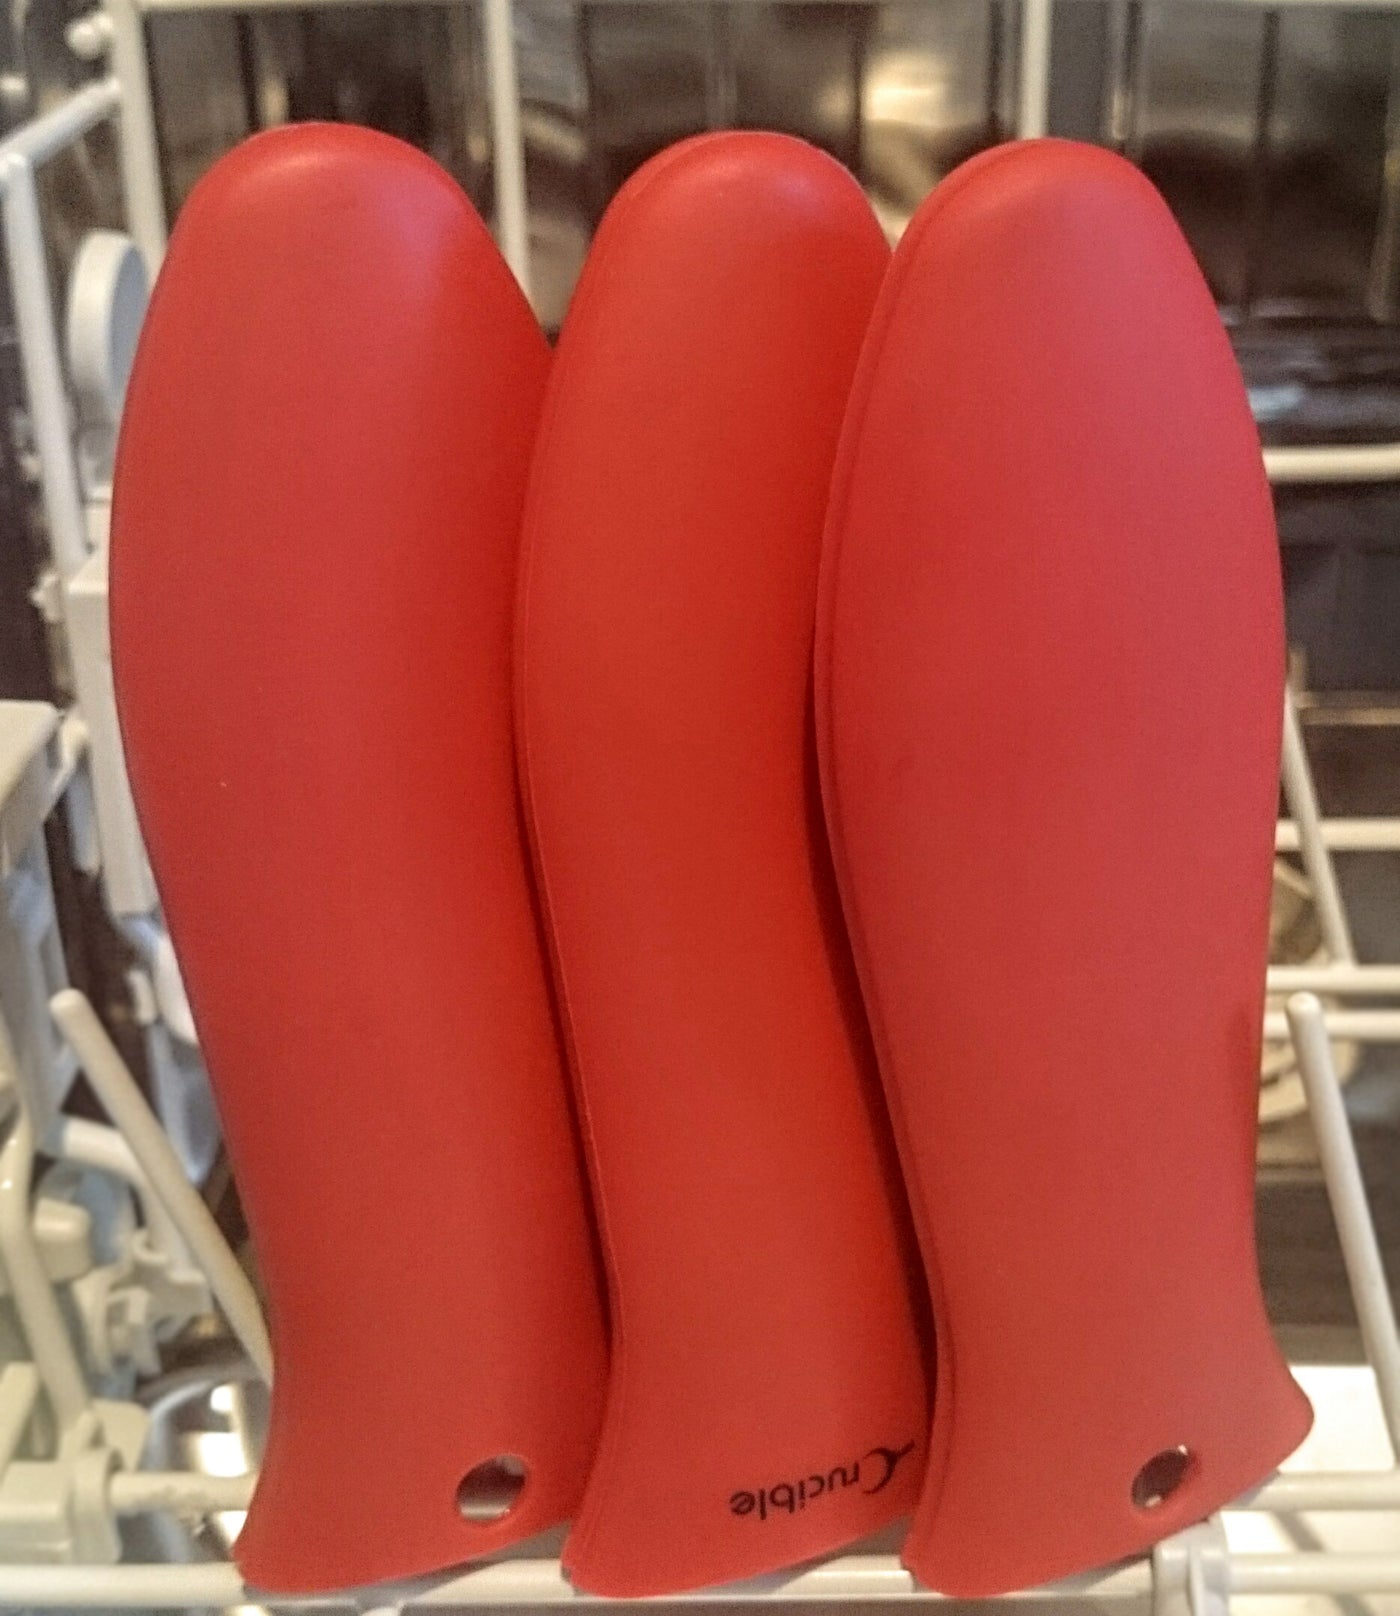 Soporte de silicona para mango caliente, extra grande (XL), rojo